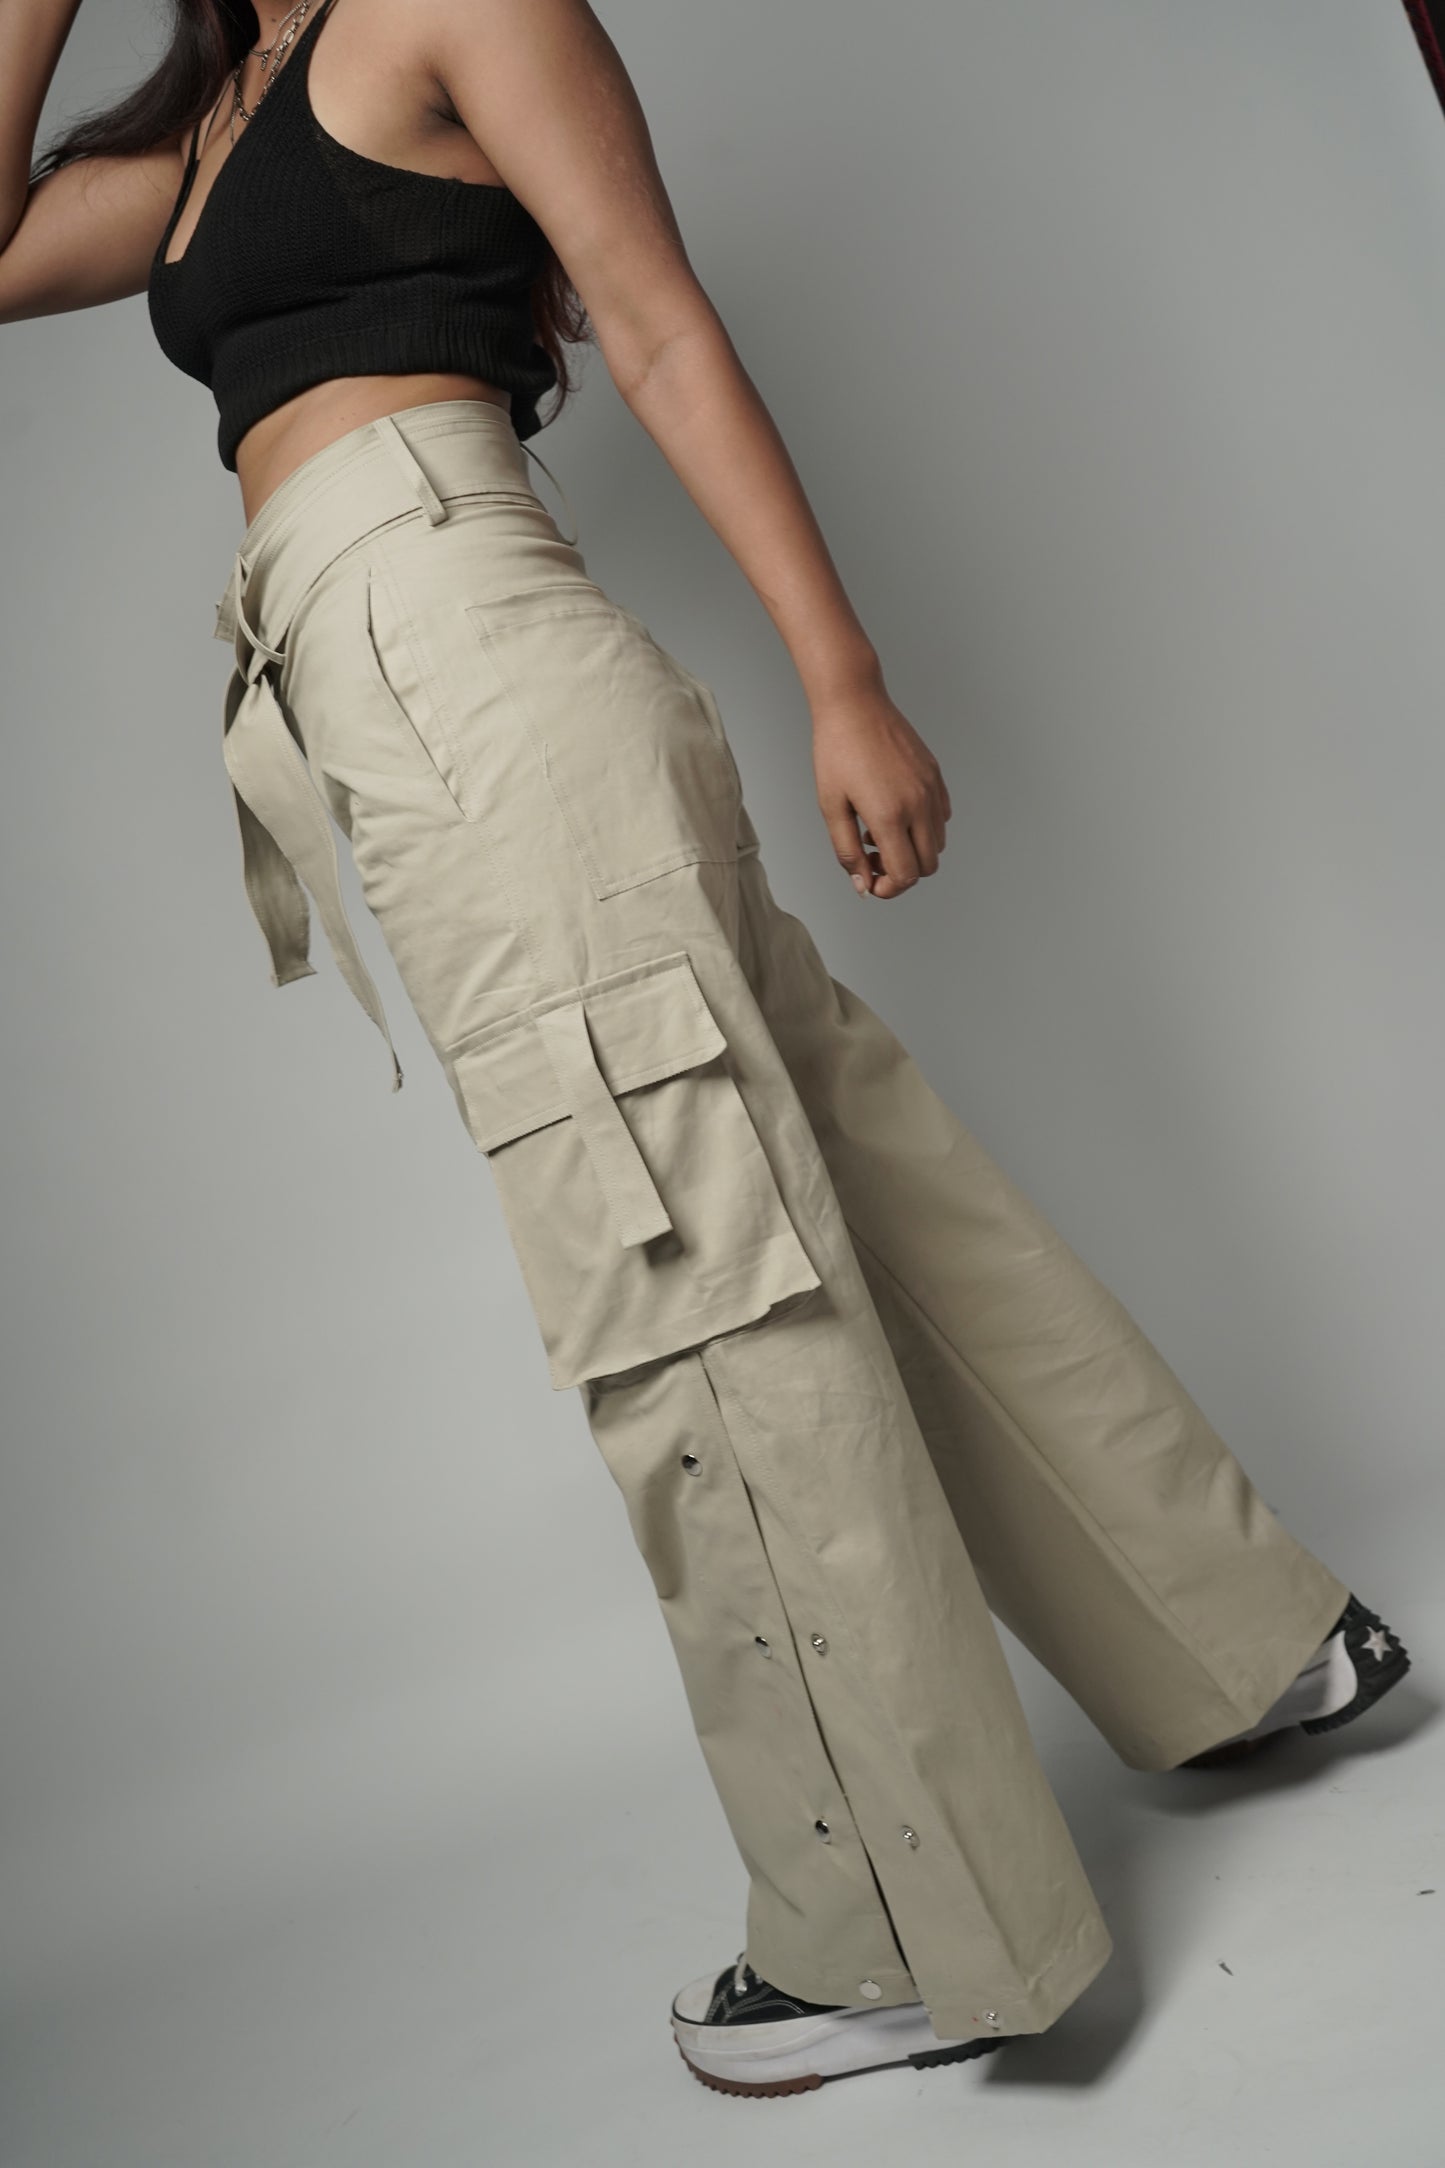 Model wearing unisex Buttoned down Pants, showcasing bottom pant cut.